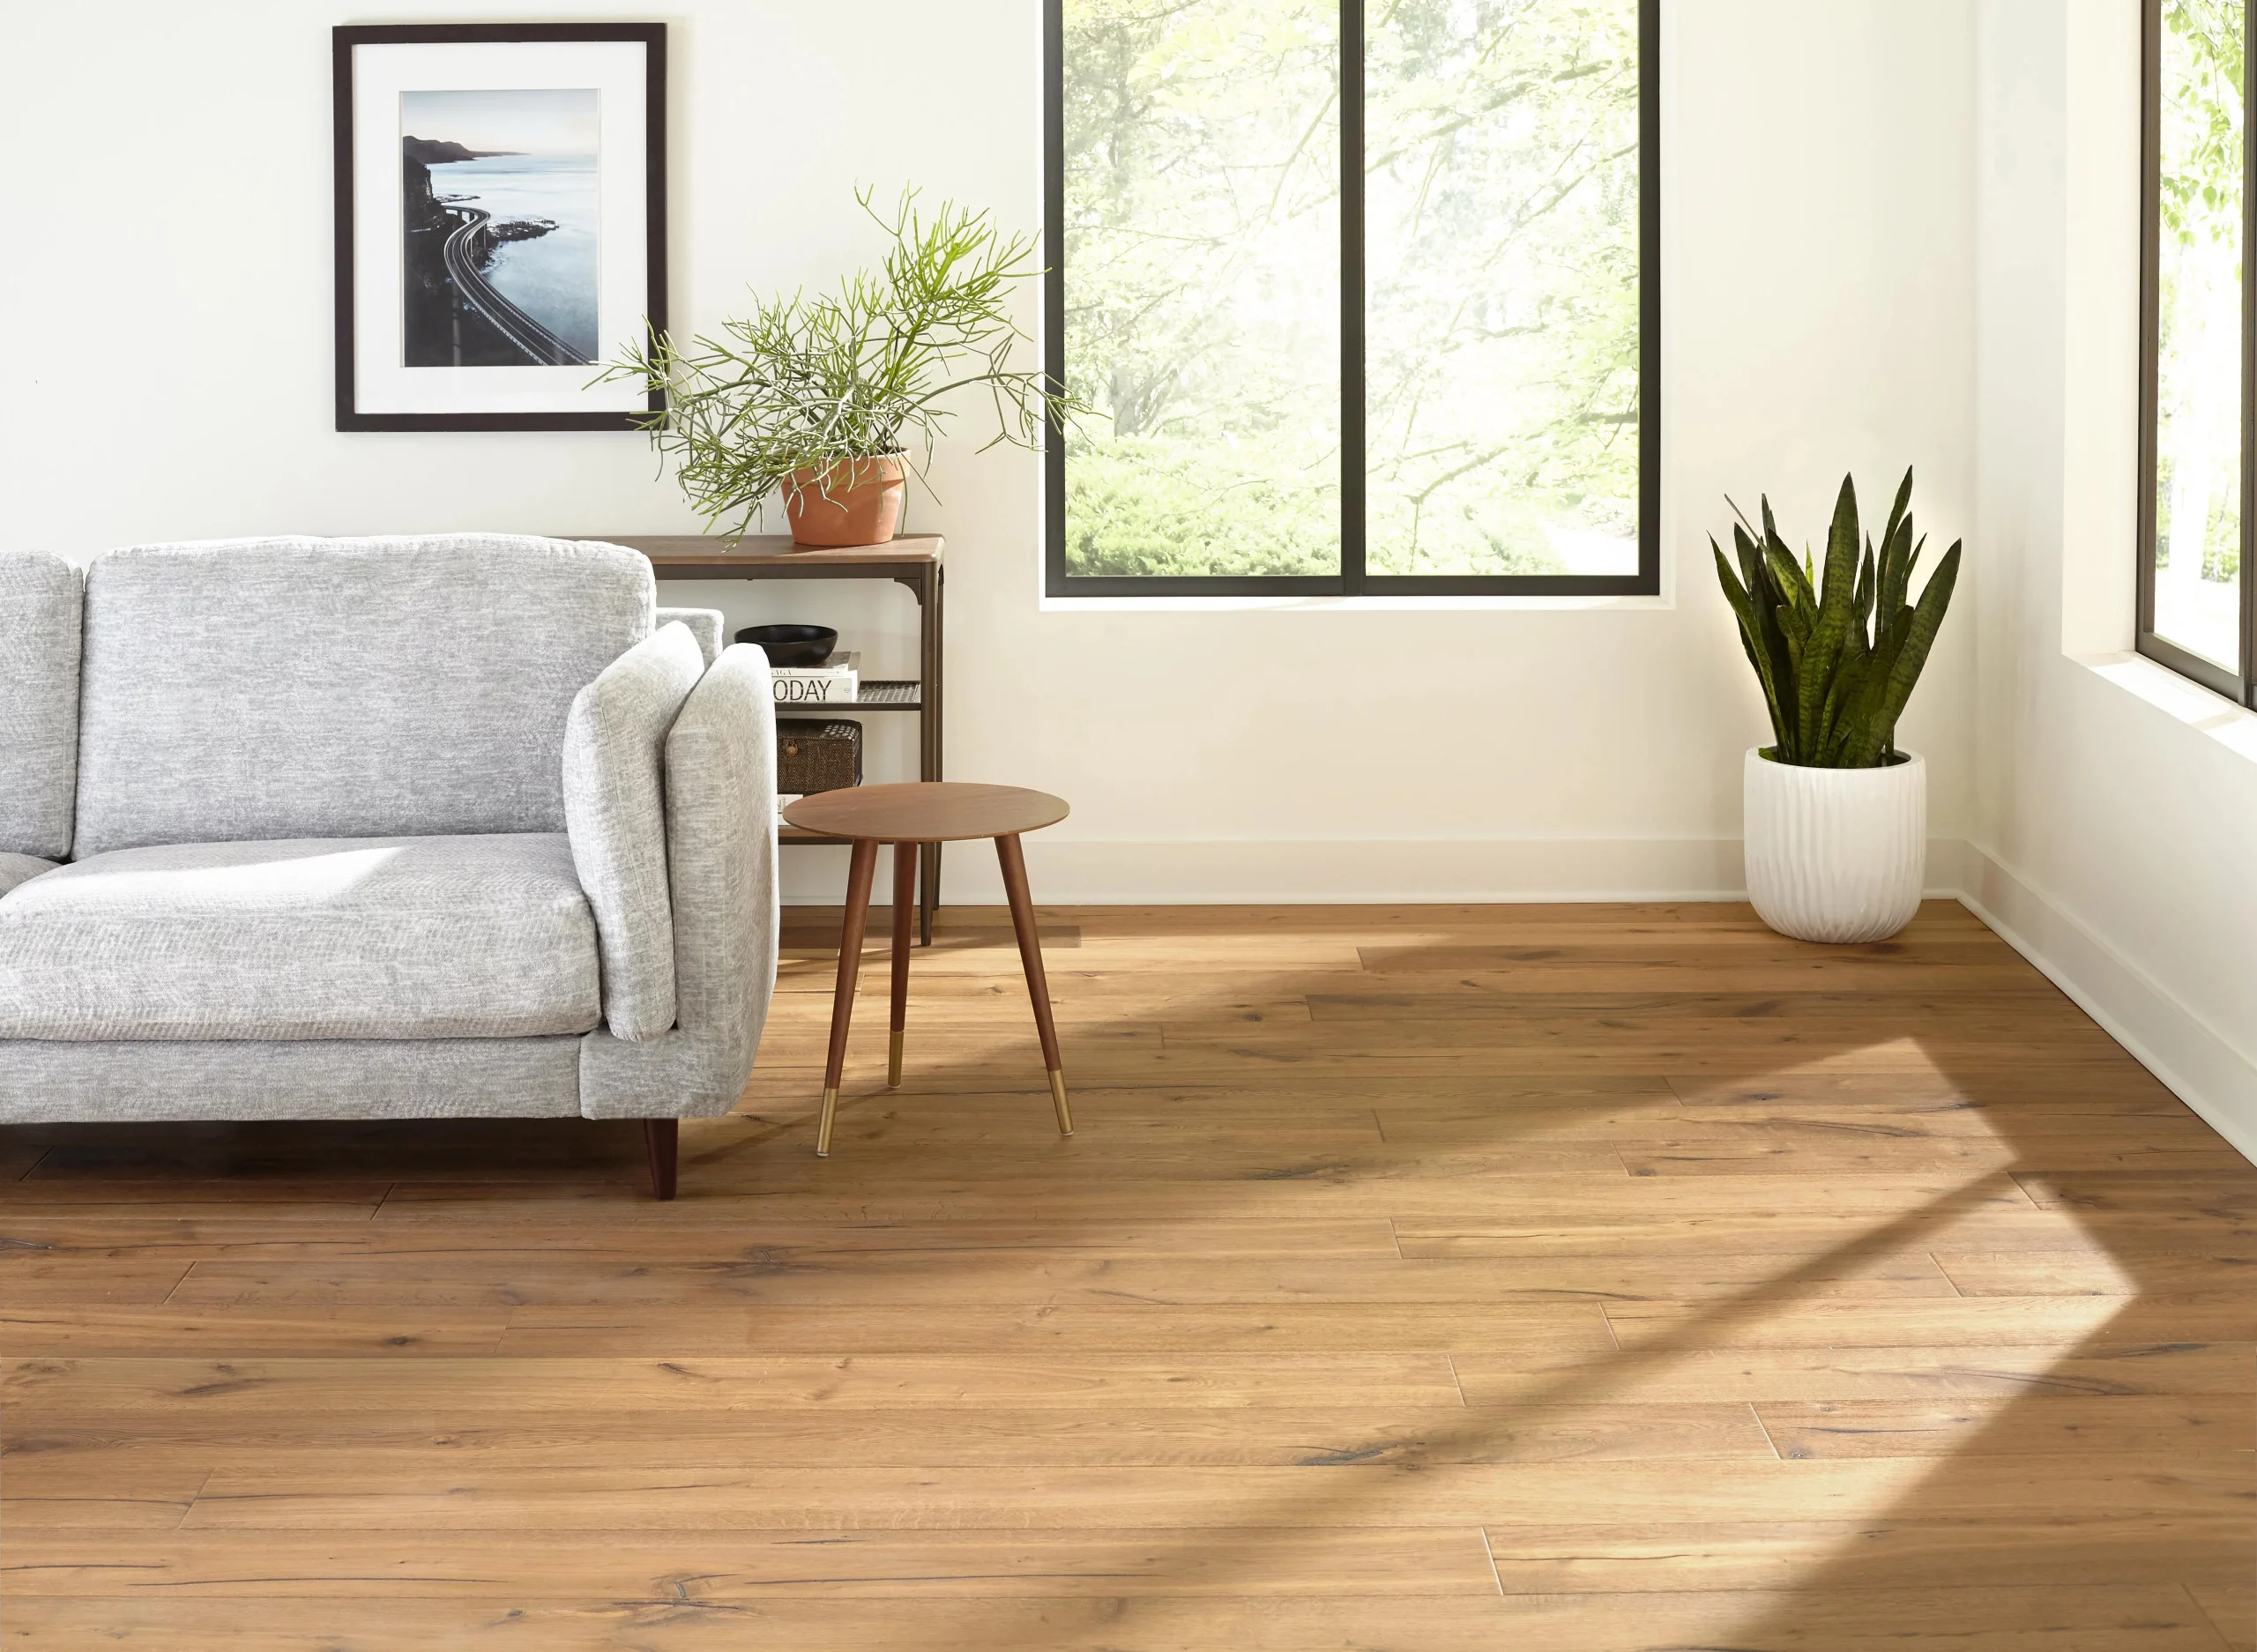 smoked white oak flooring - Is white oak a good choice for flooring